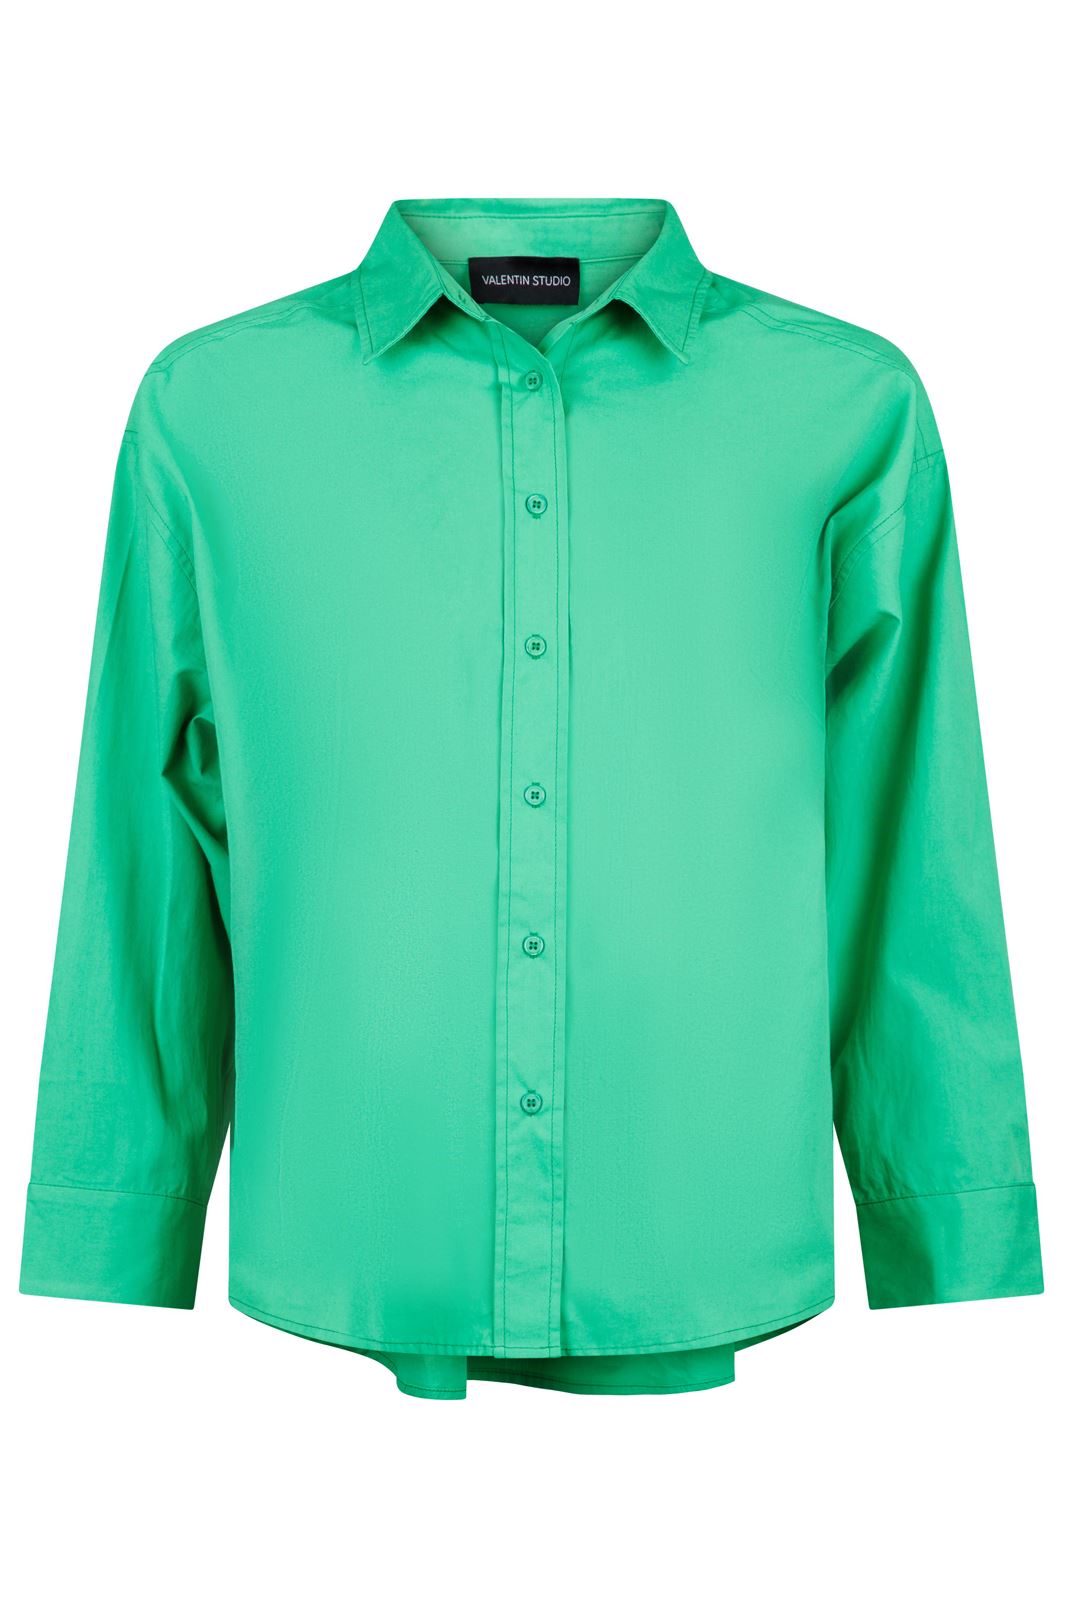 Valentin Studio - Exclusive Shirt - Green Skjorter 